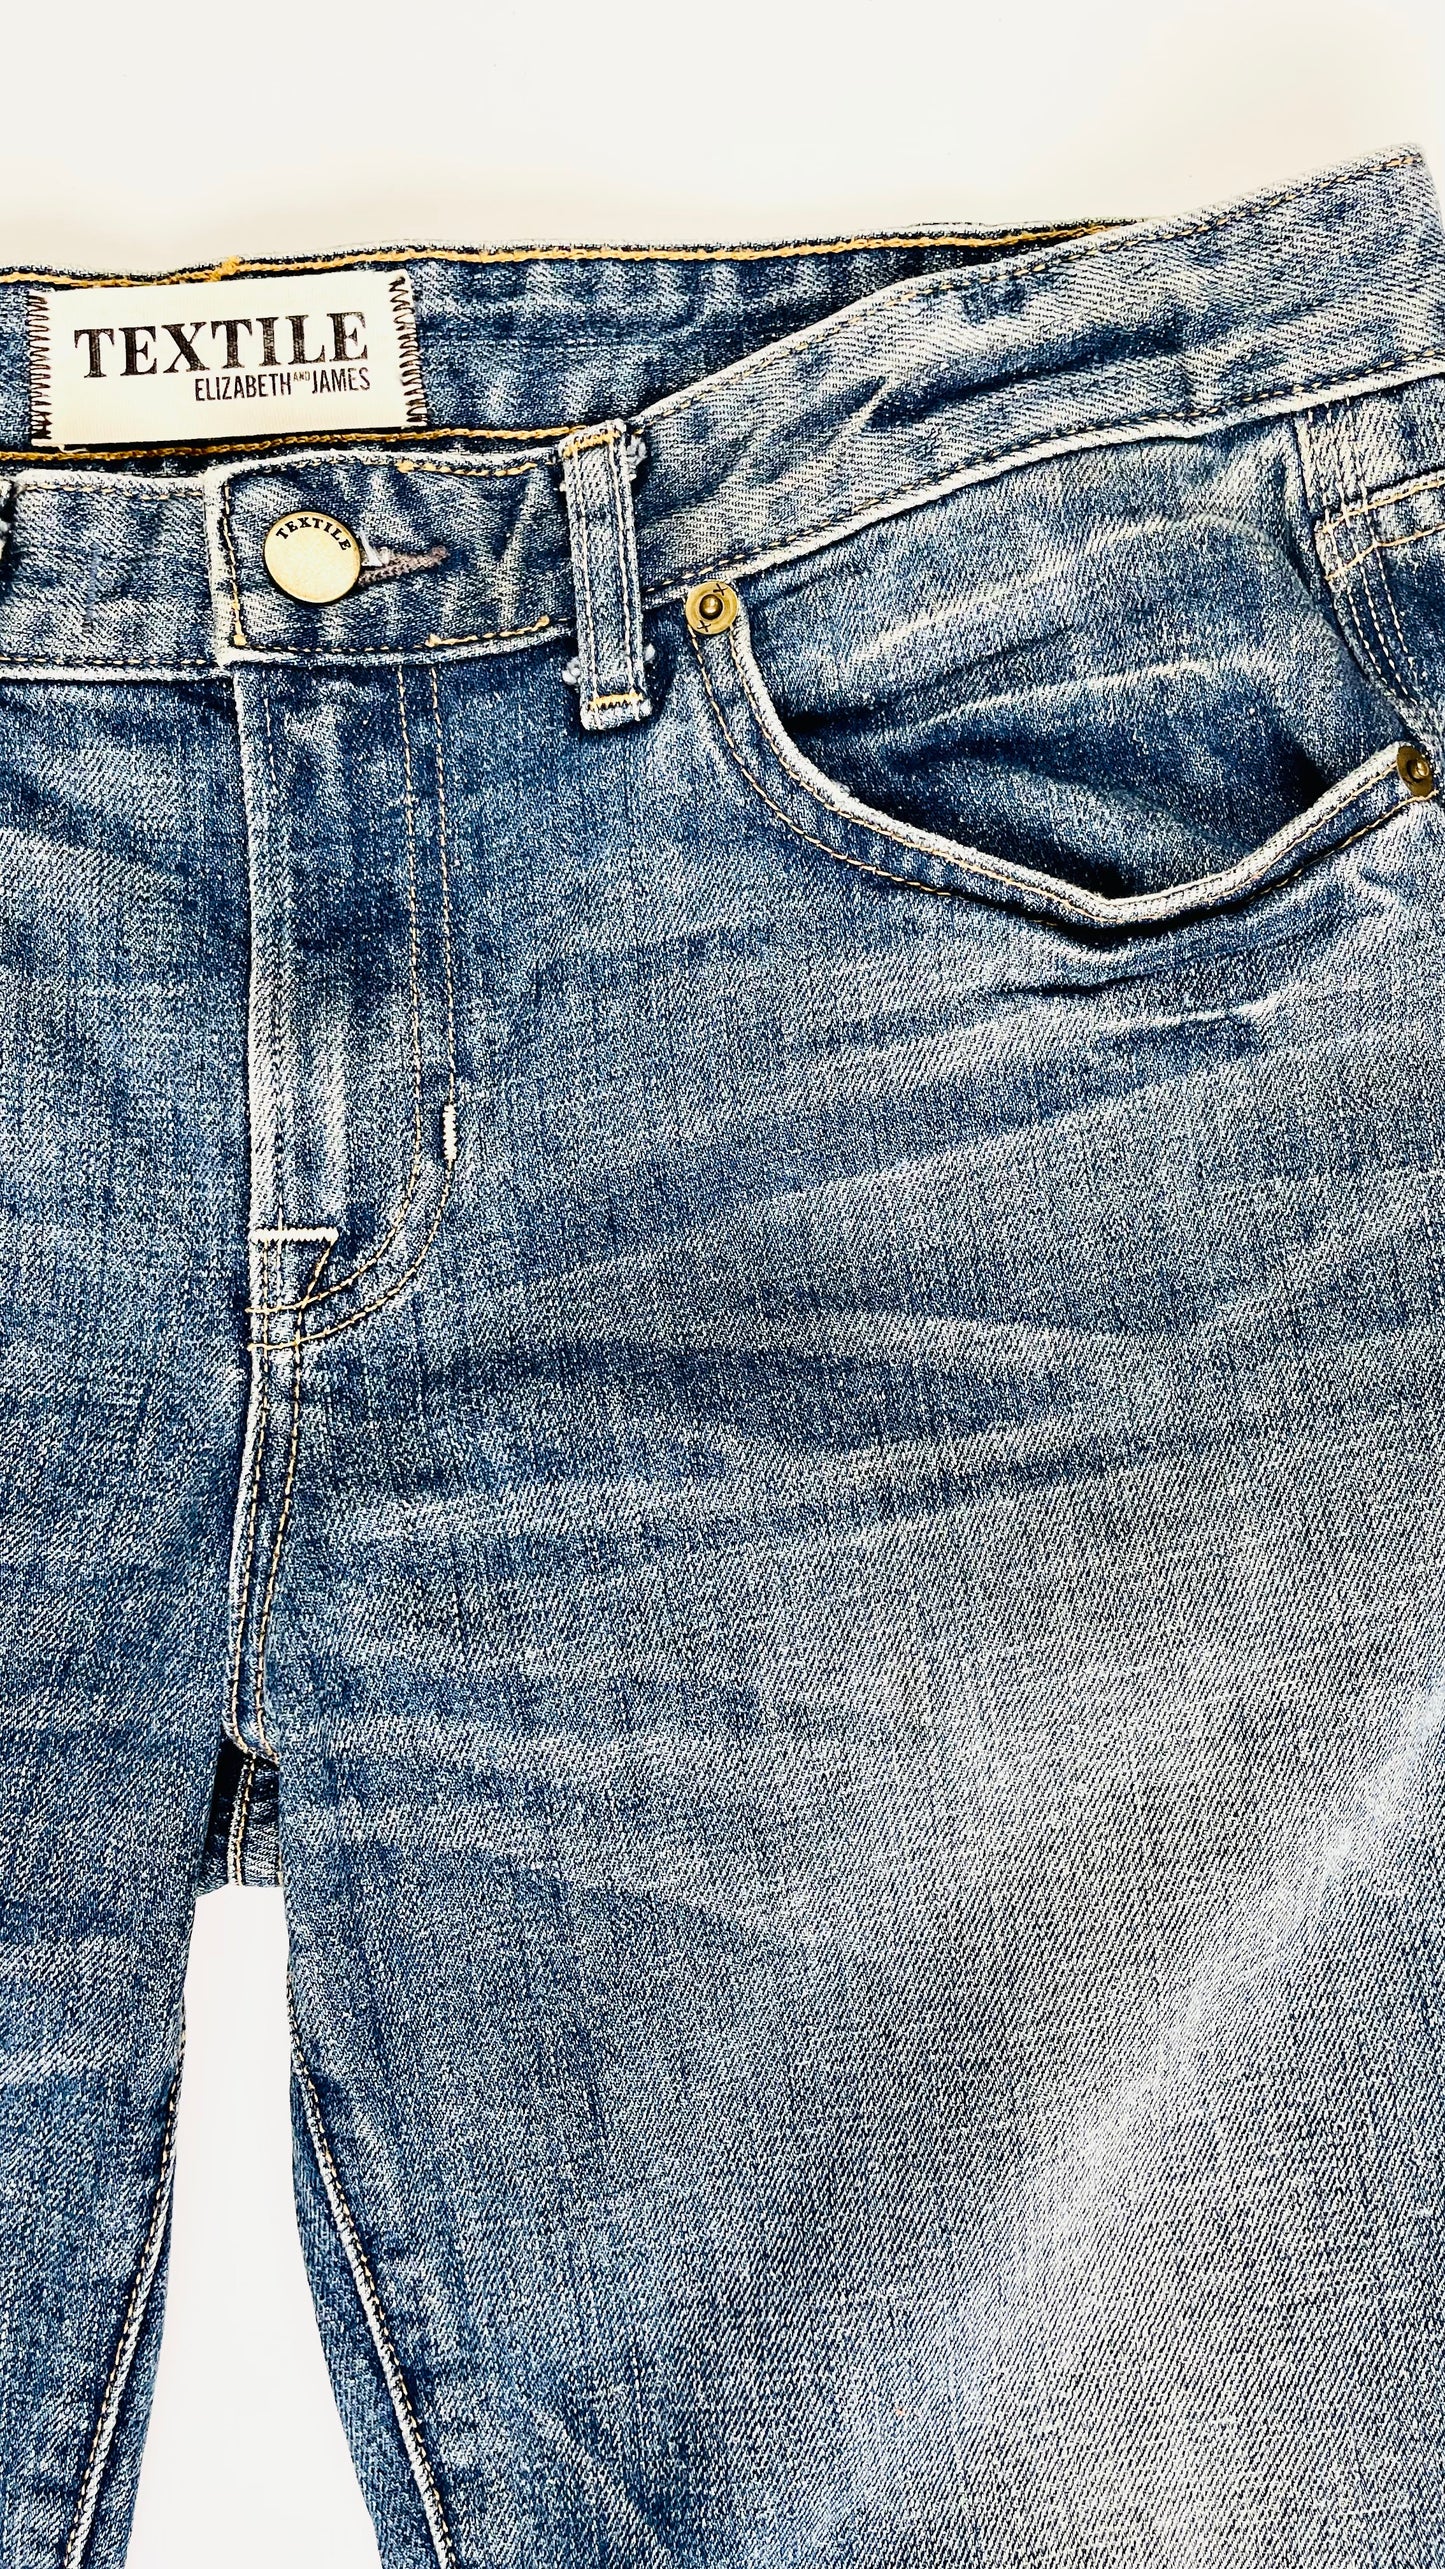 Pre-Loved Elizabeth & James low rise blue slim fit jeans - Size 28